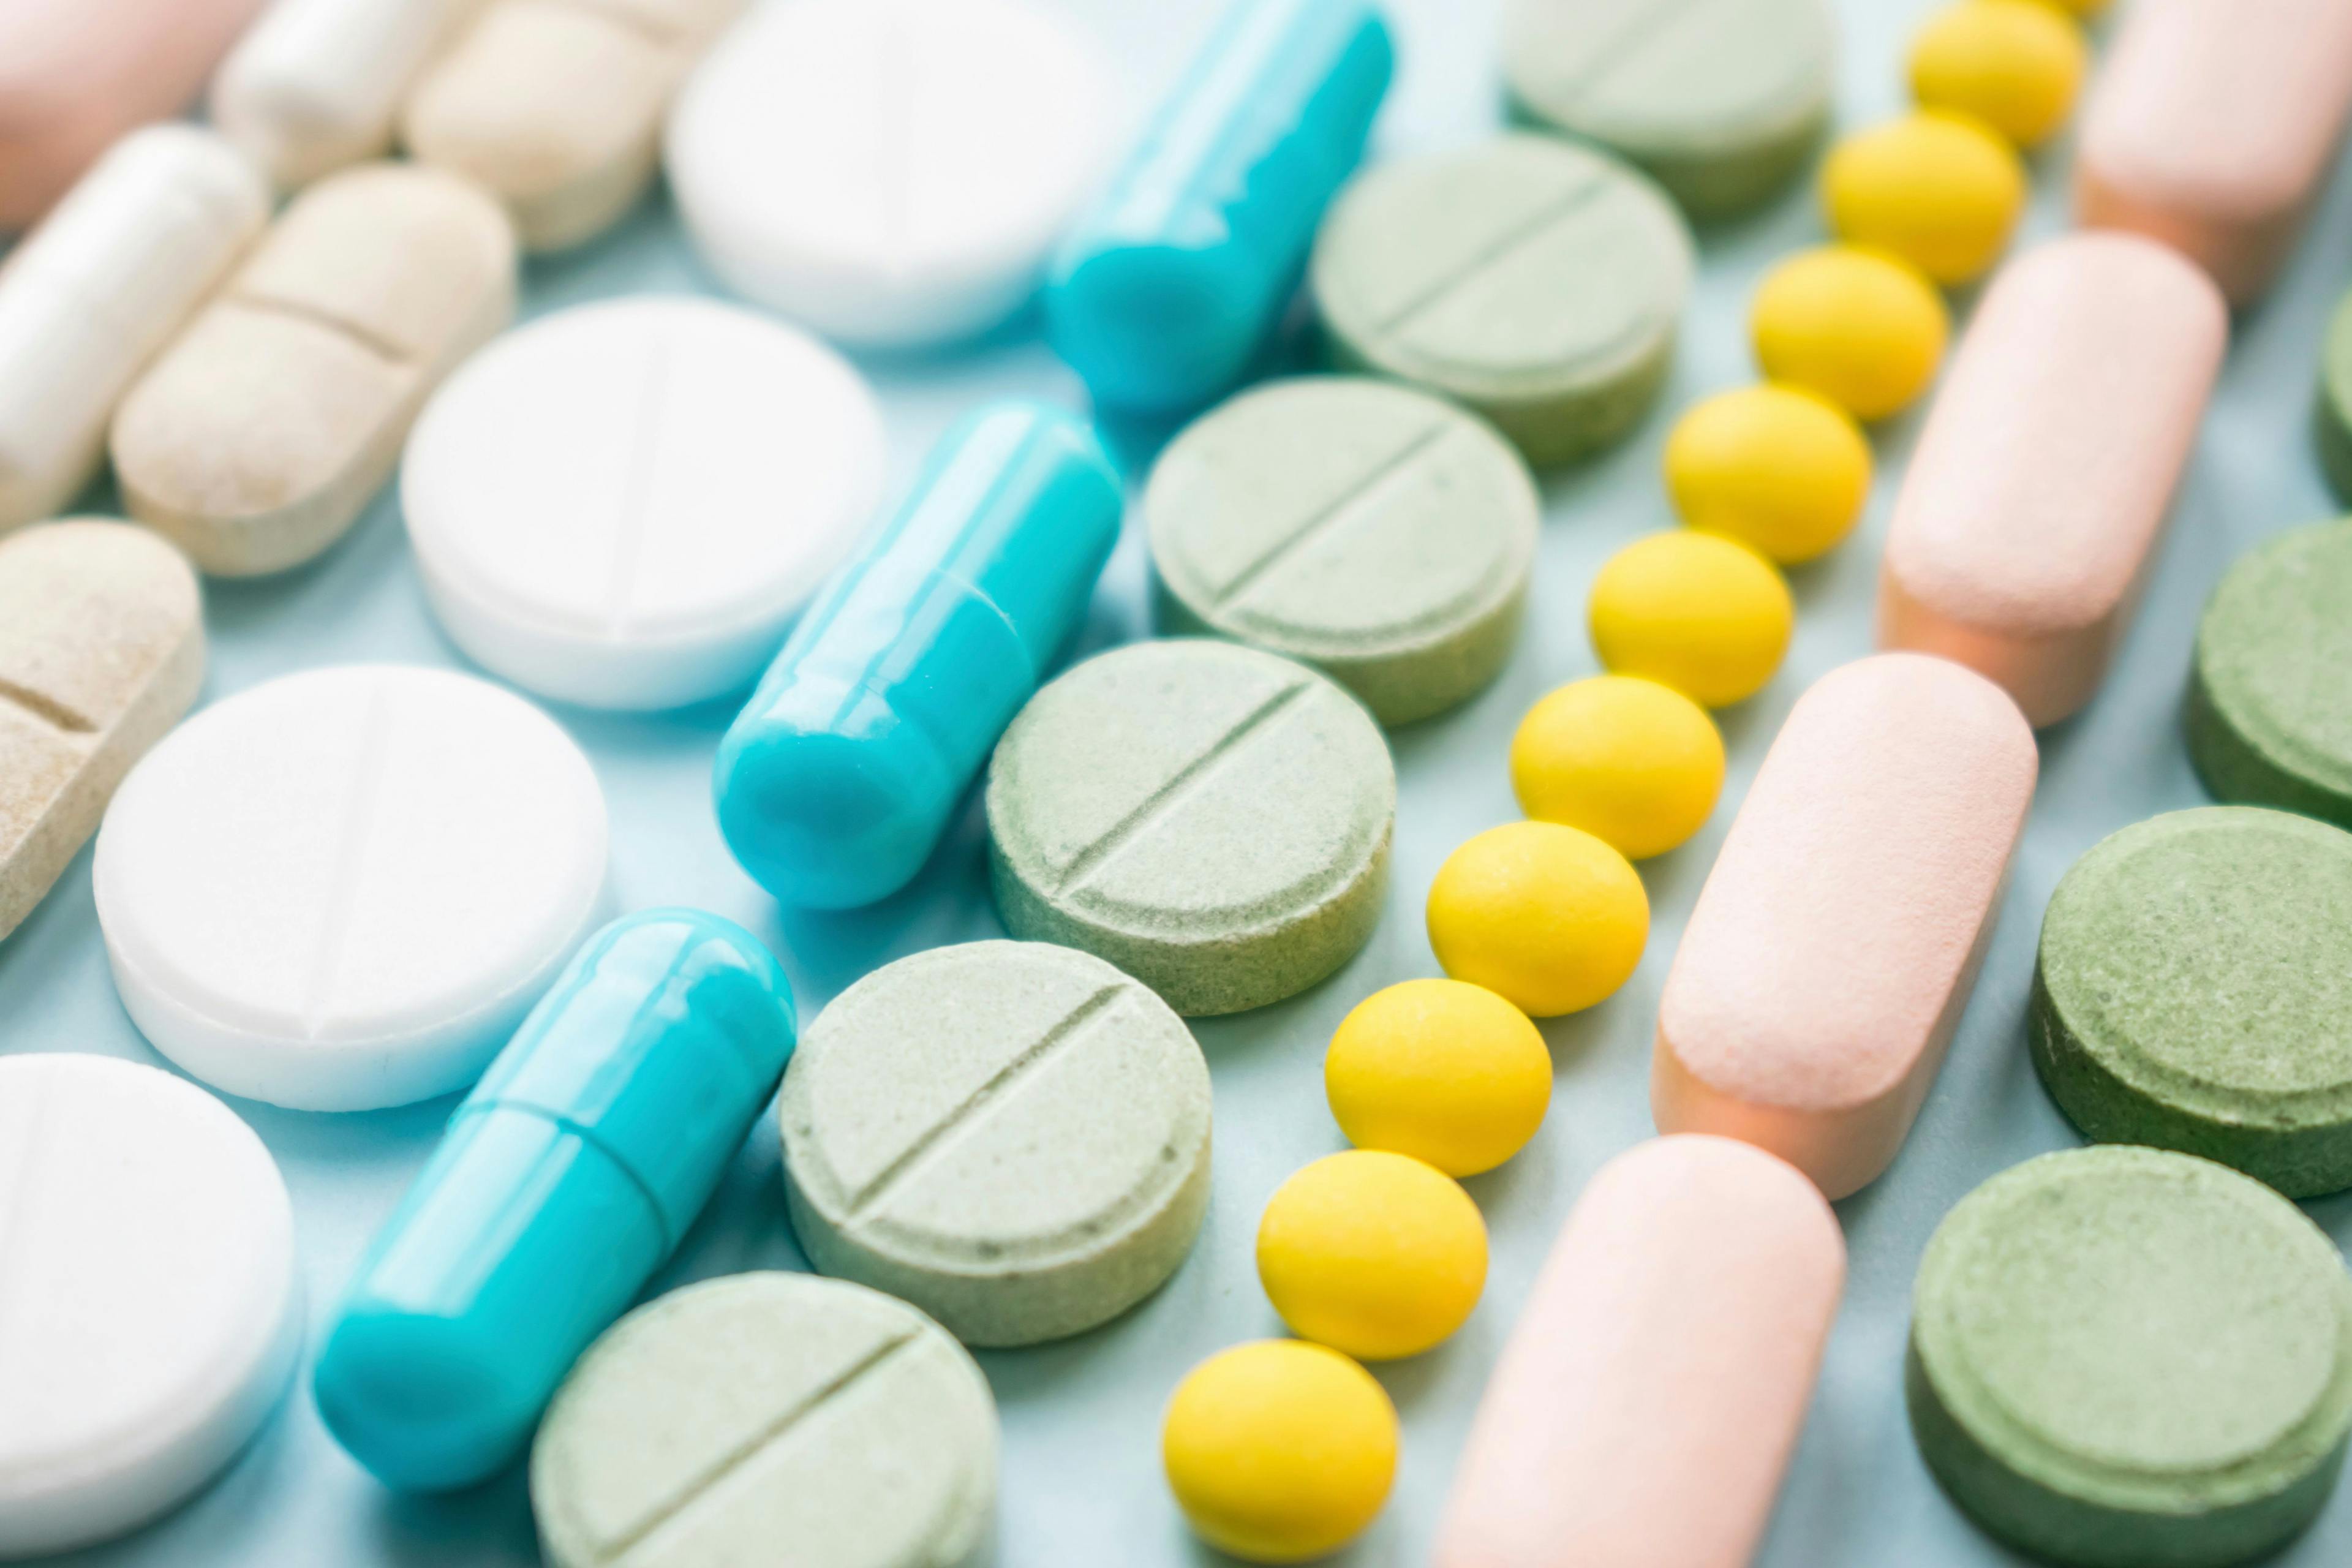 generic drugs | Image Credit: irissca - stock.adobe.com